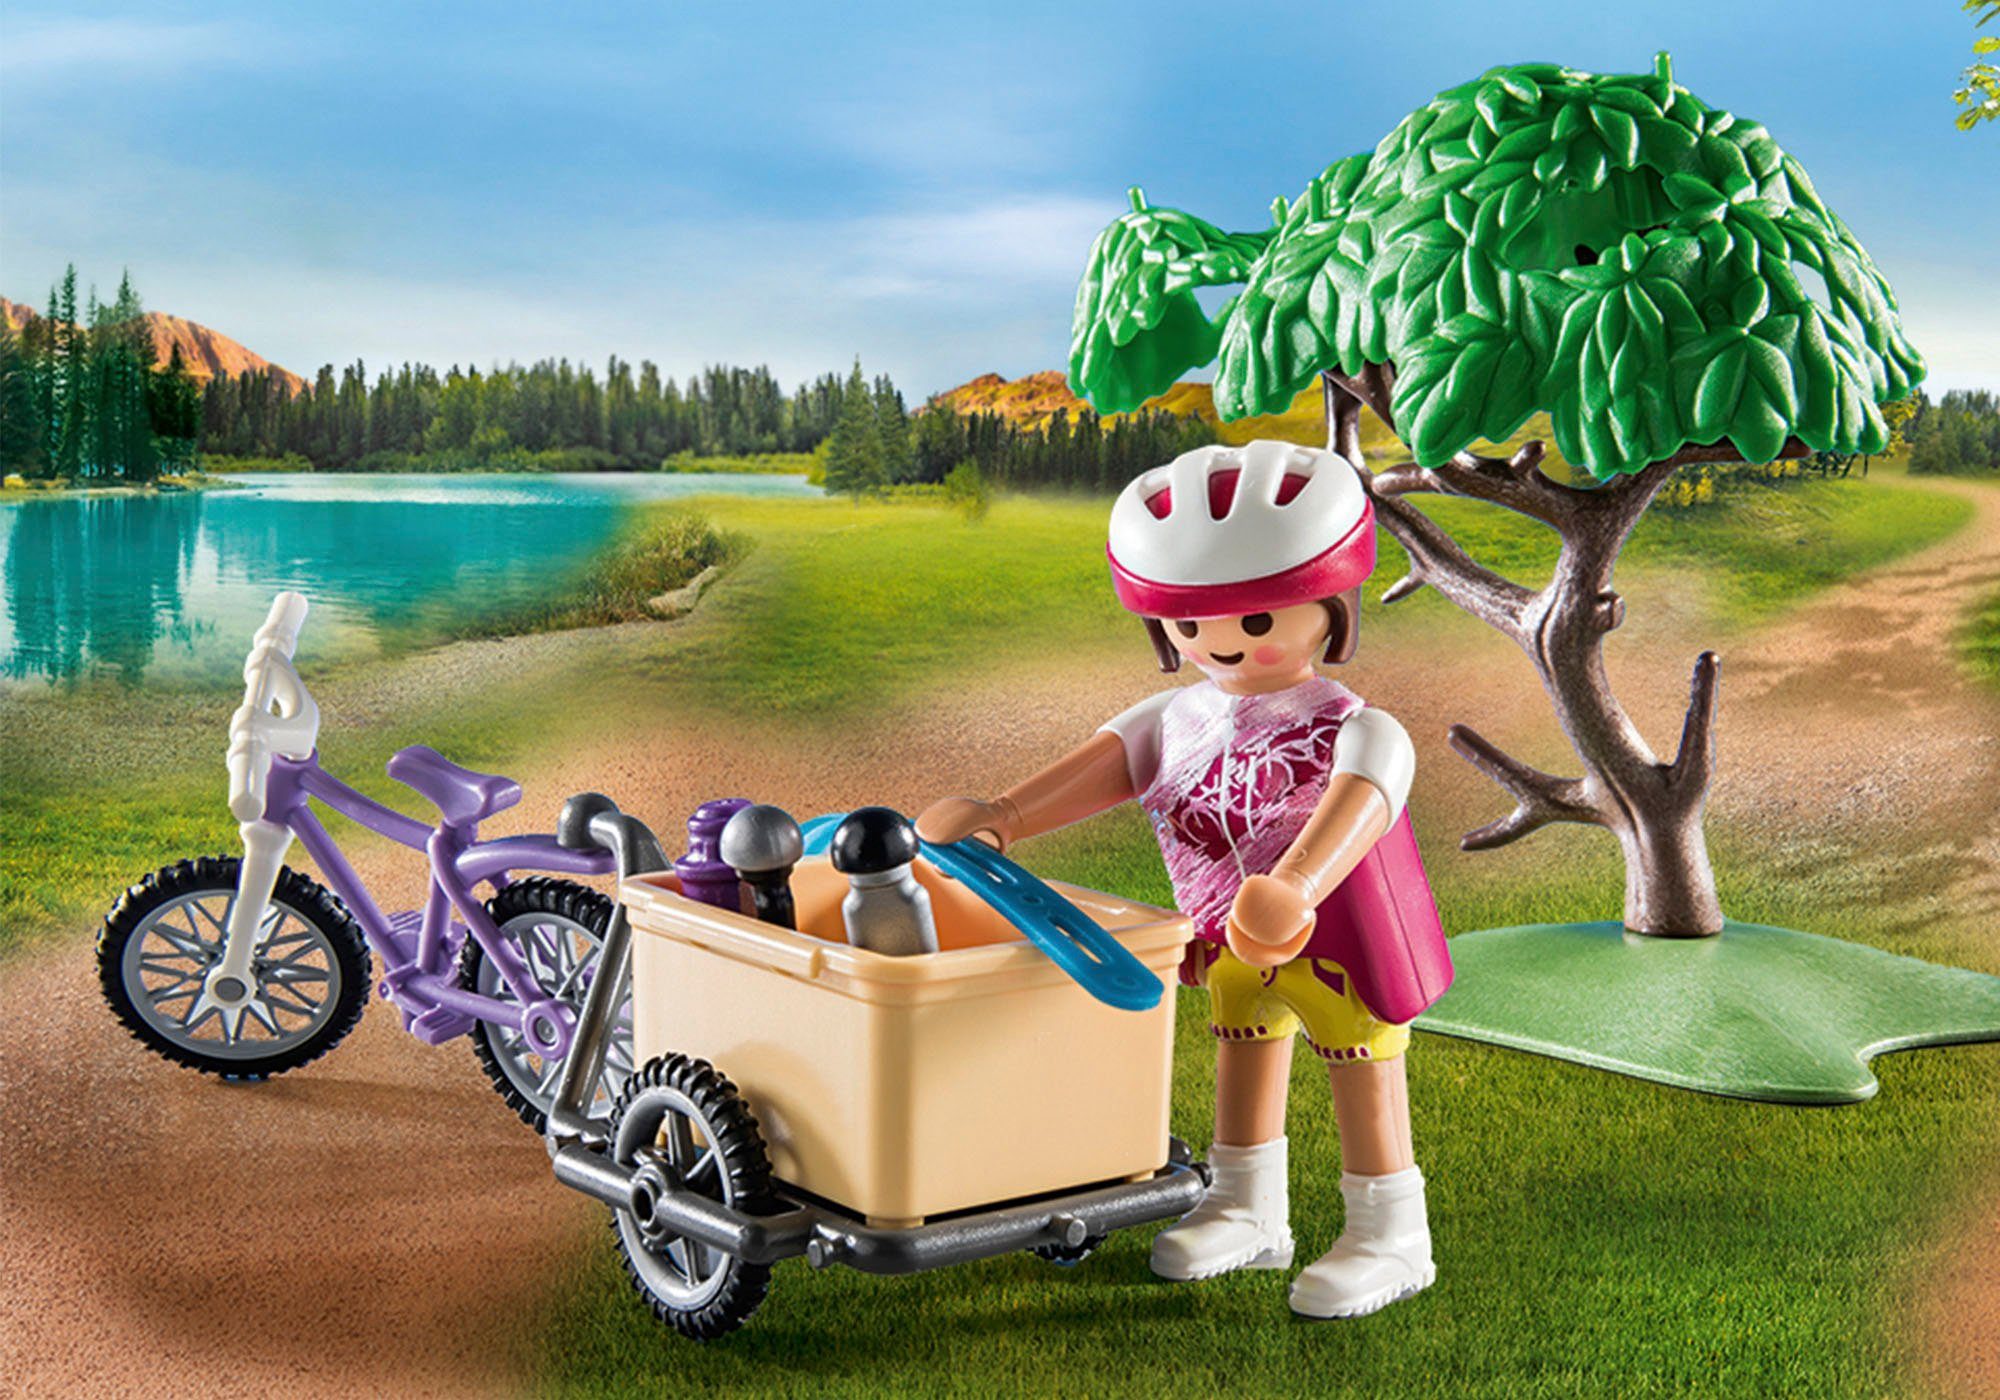 & (71426), Family Konstruktions-Spielset Mountainbike-Tour St) Fun, (52 Playmobil®